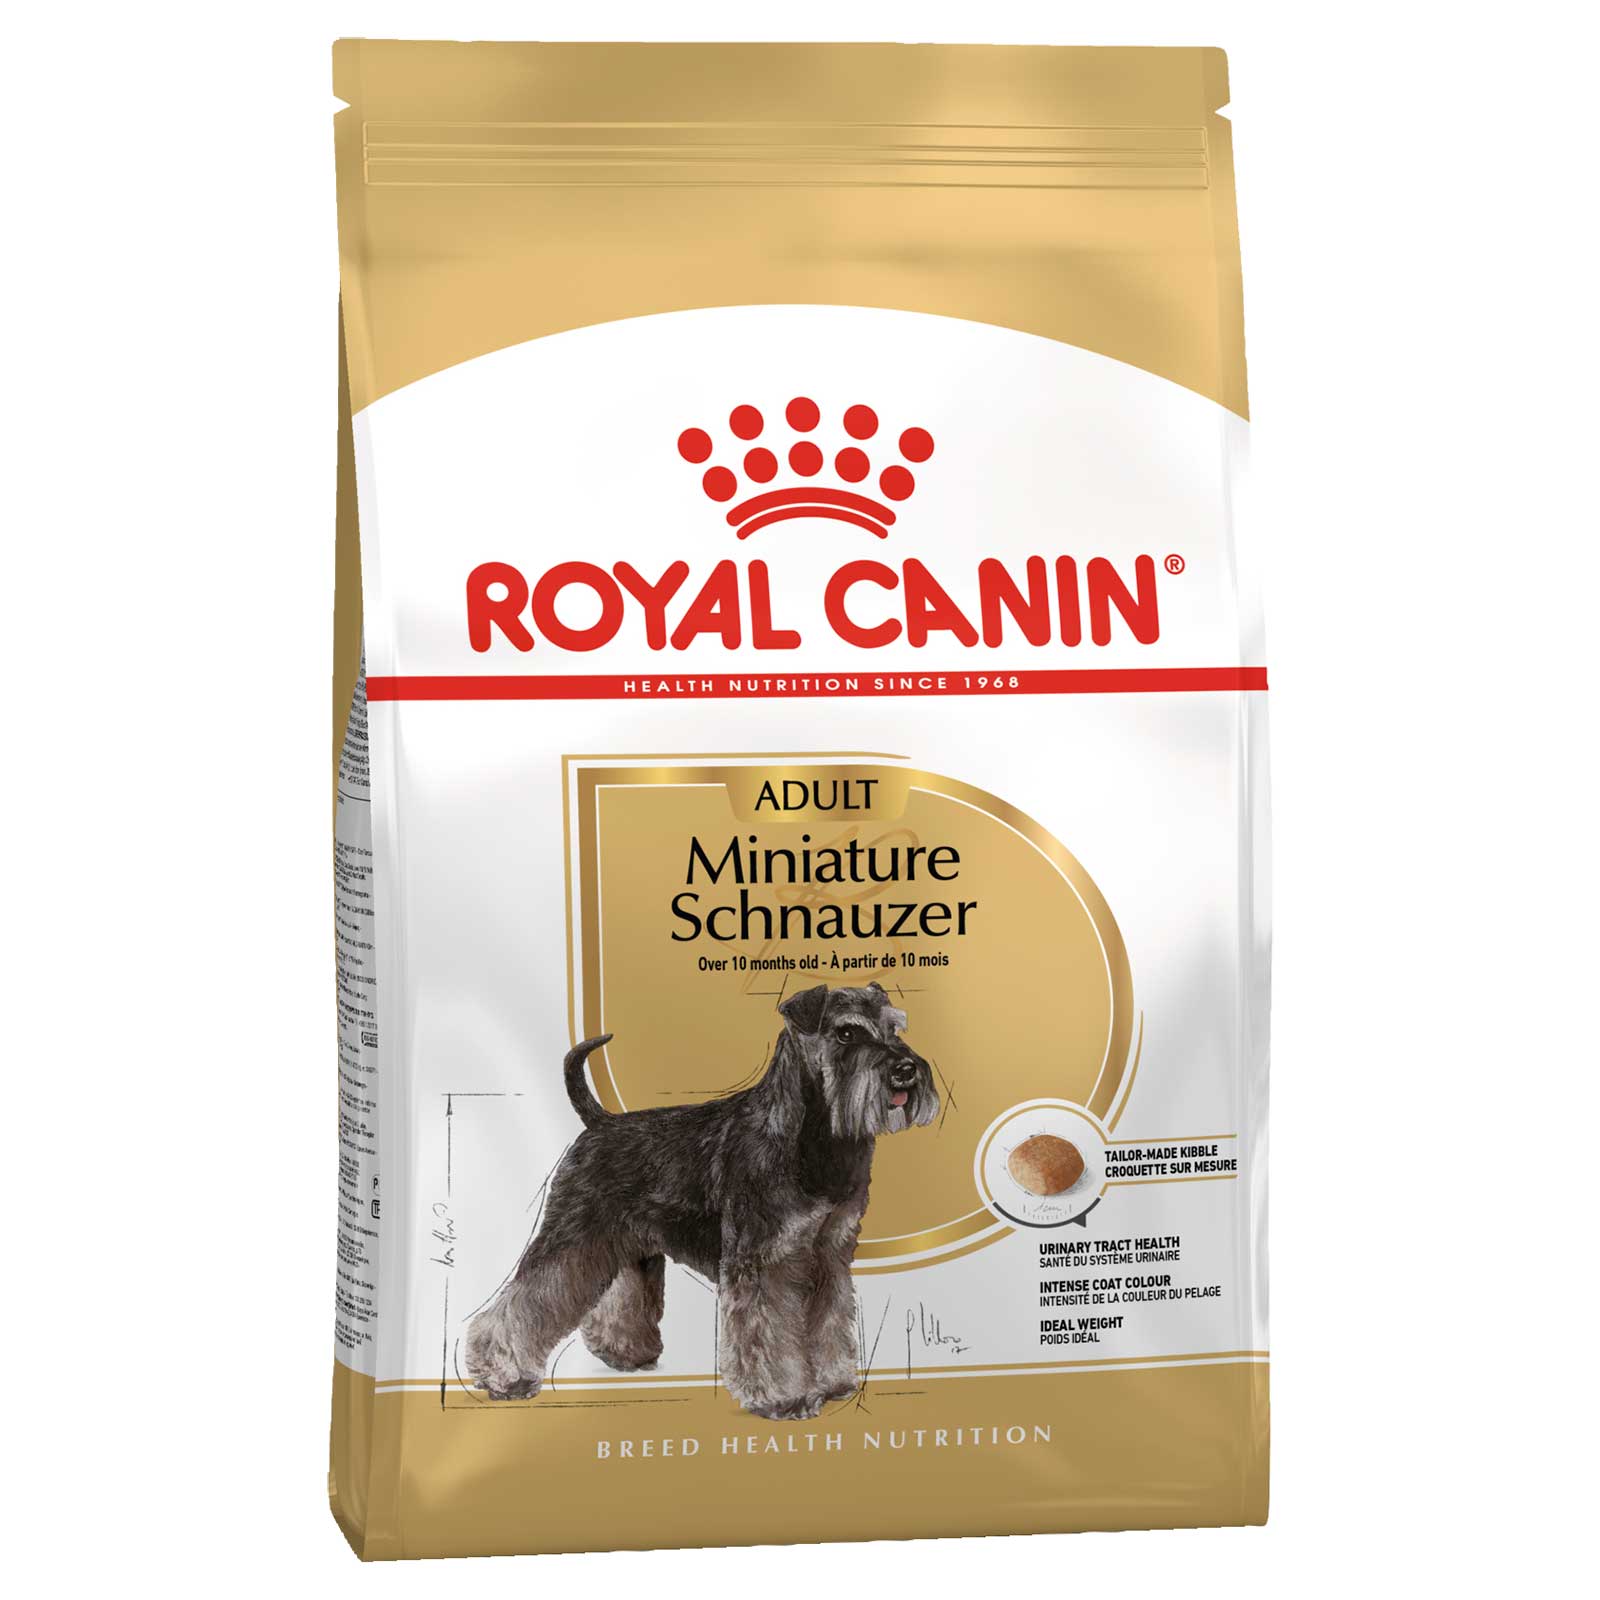 Royal Canin Dog Food Adult Mini Schnauzer